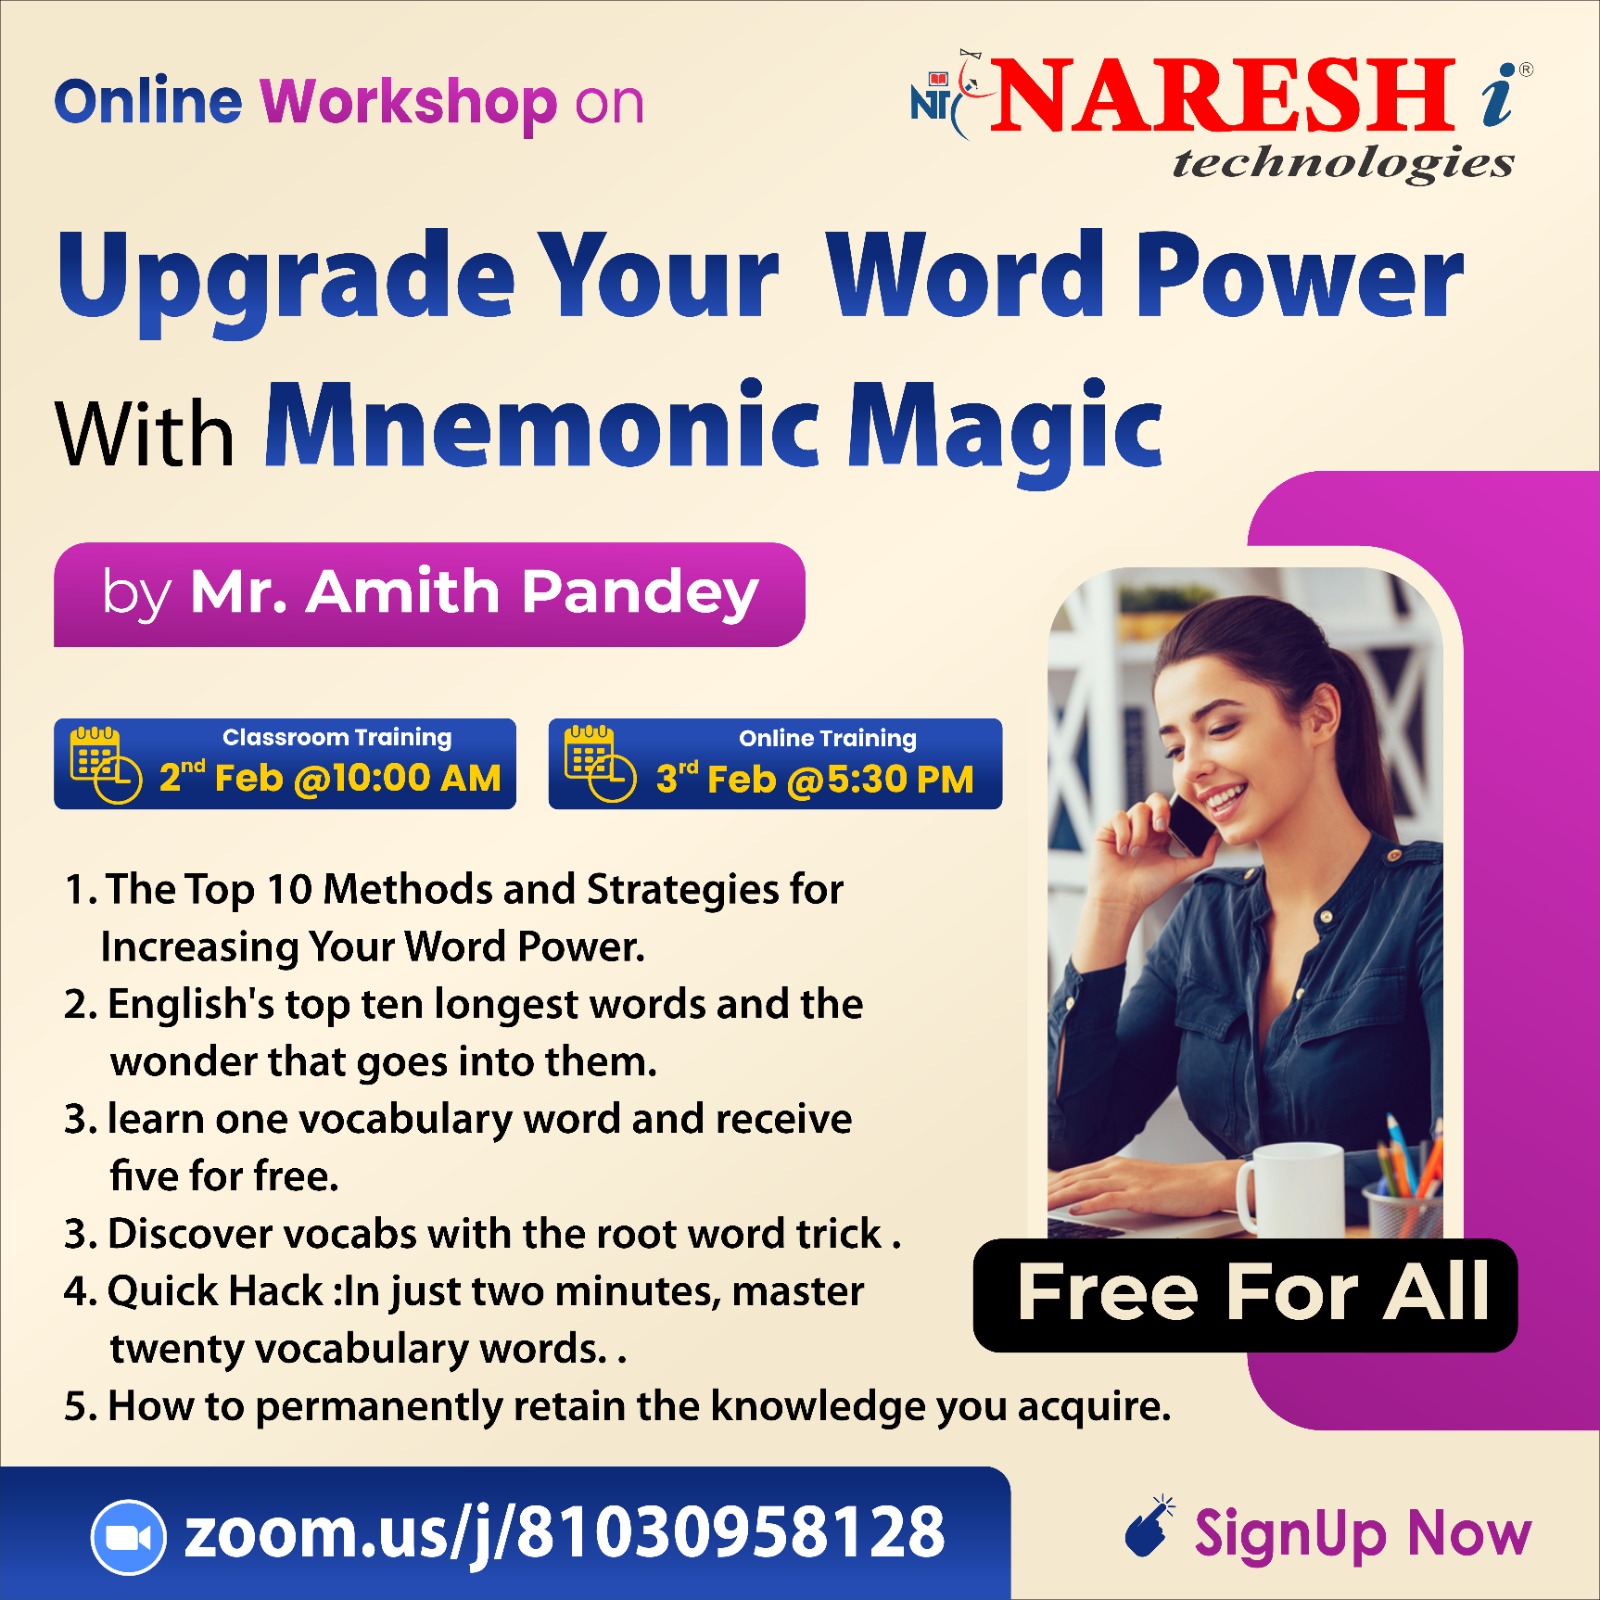 Spoken English Free workshop at NareshIT in Hyderabad, Online Event